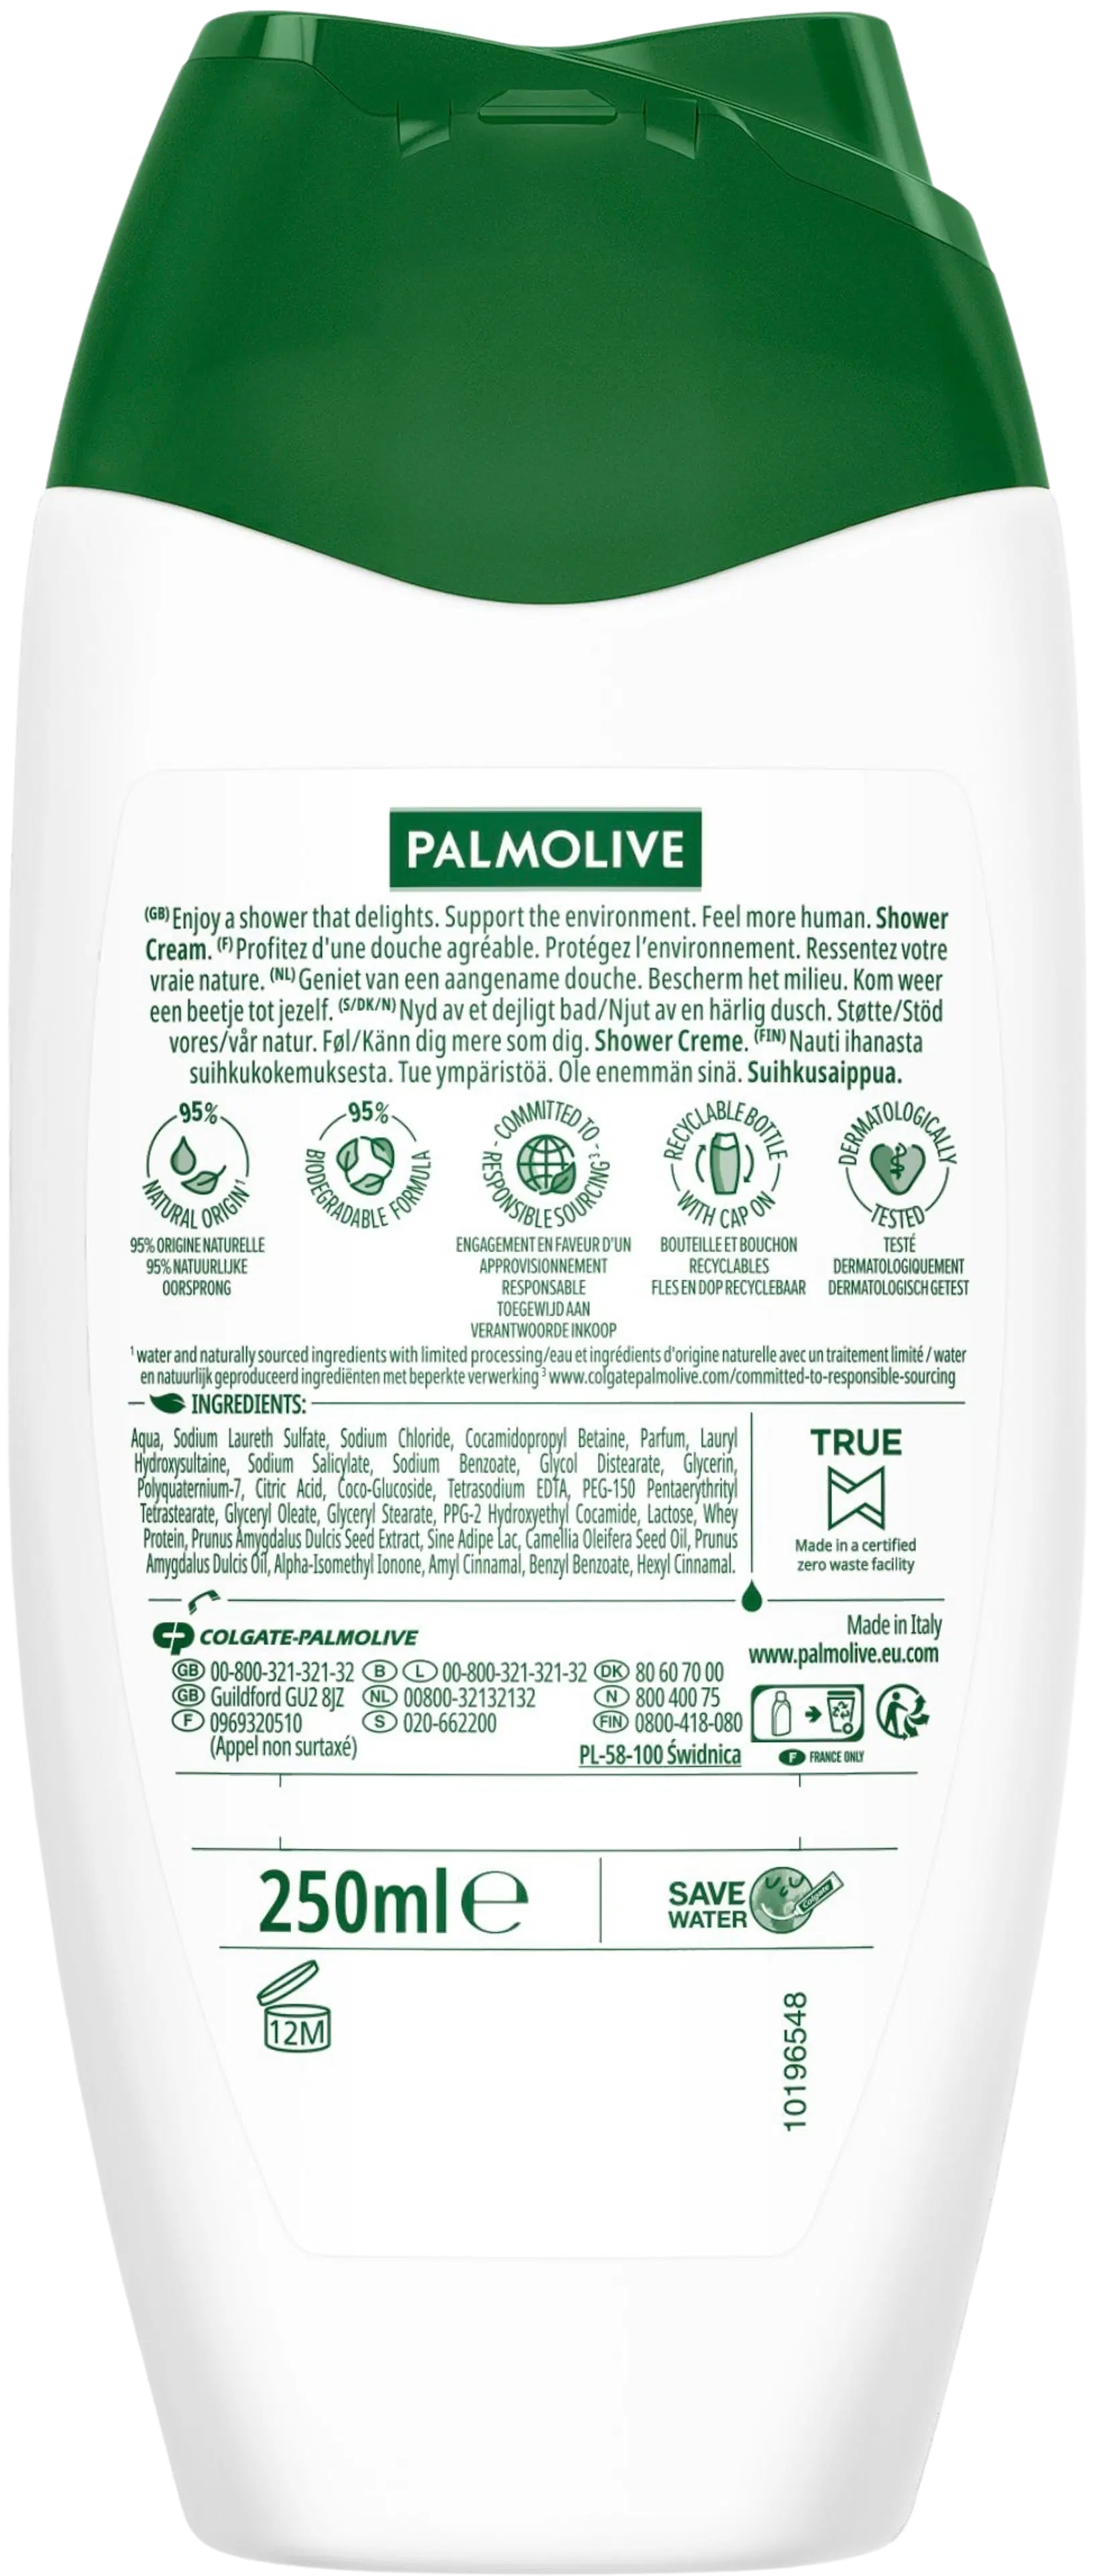 Palmolive Naturals Camellia Oil and Almond suihkusaippua 250 ml